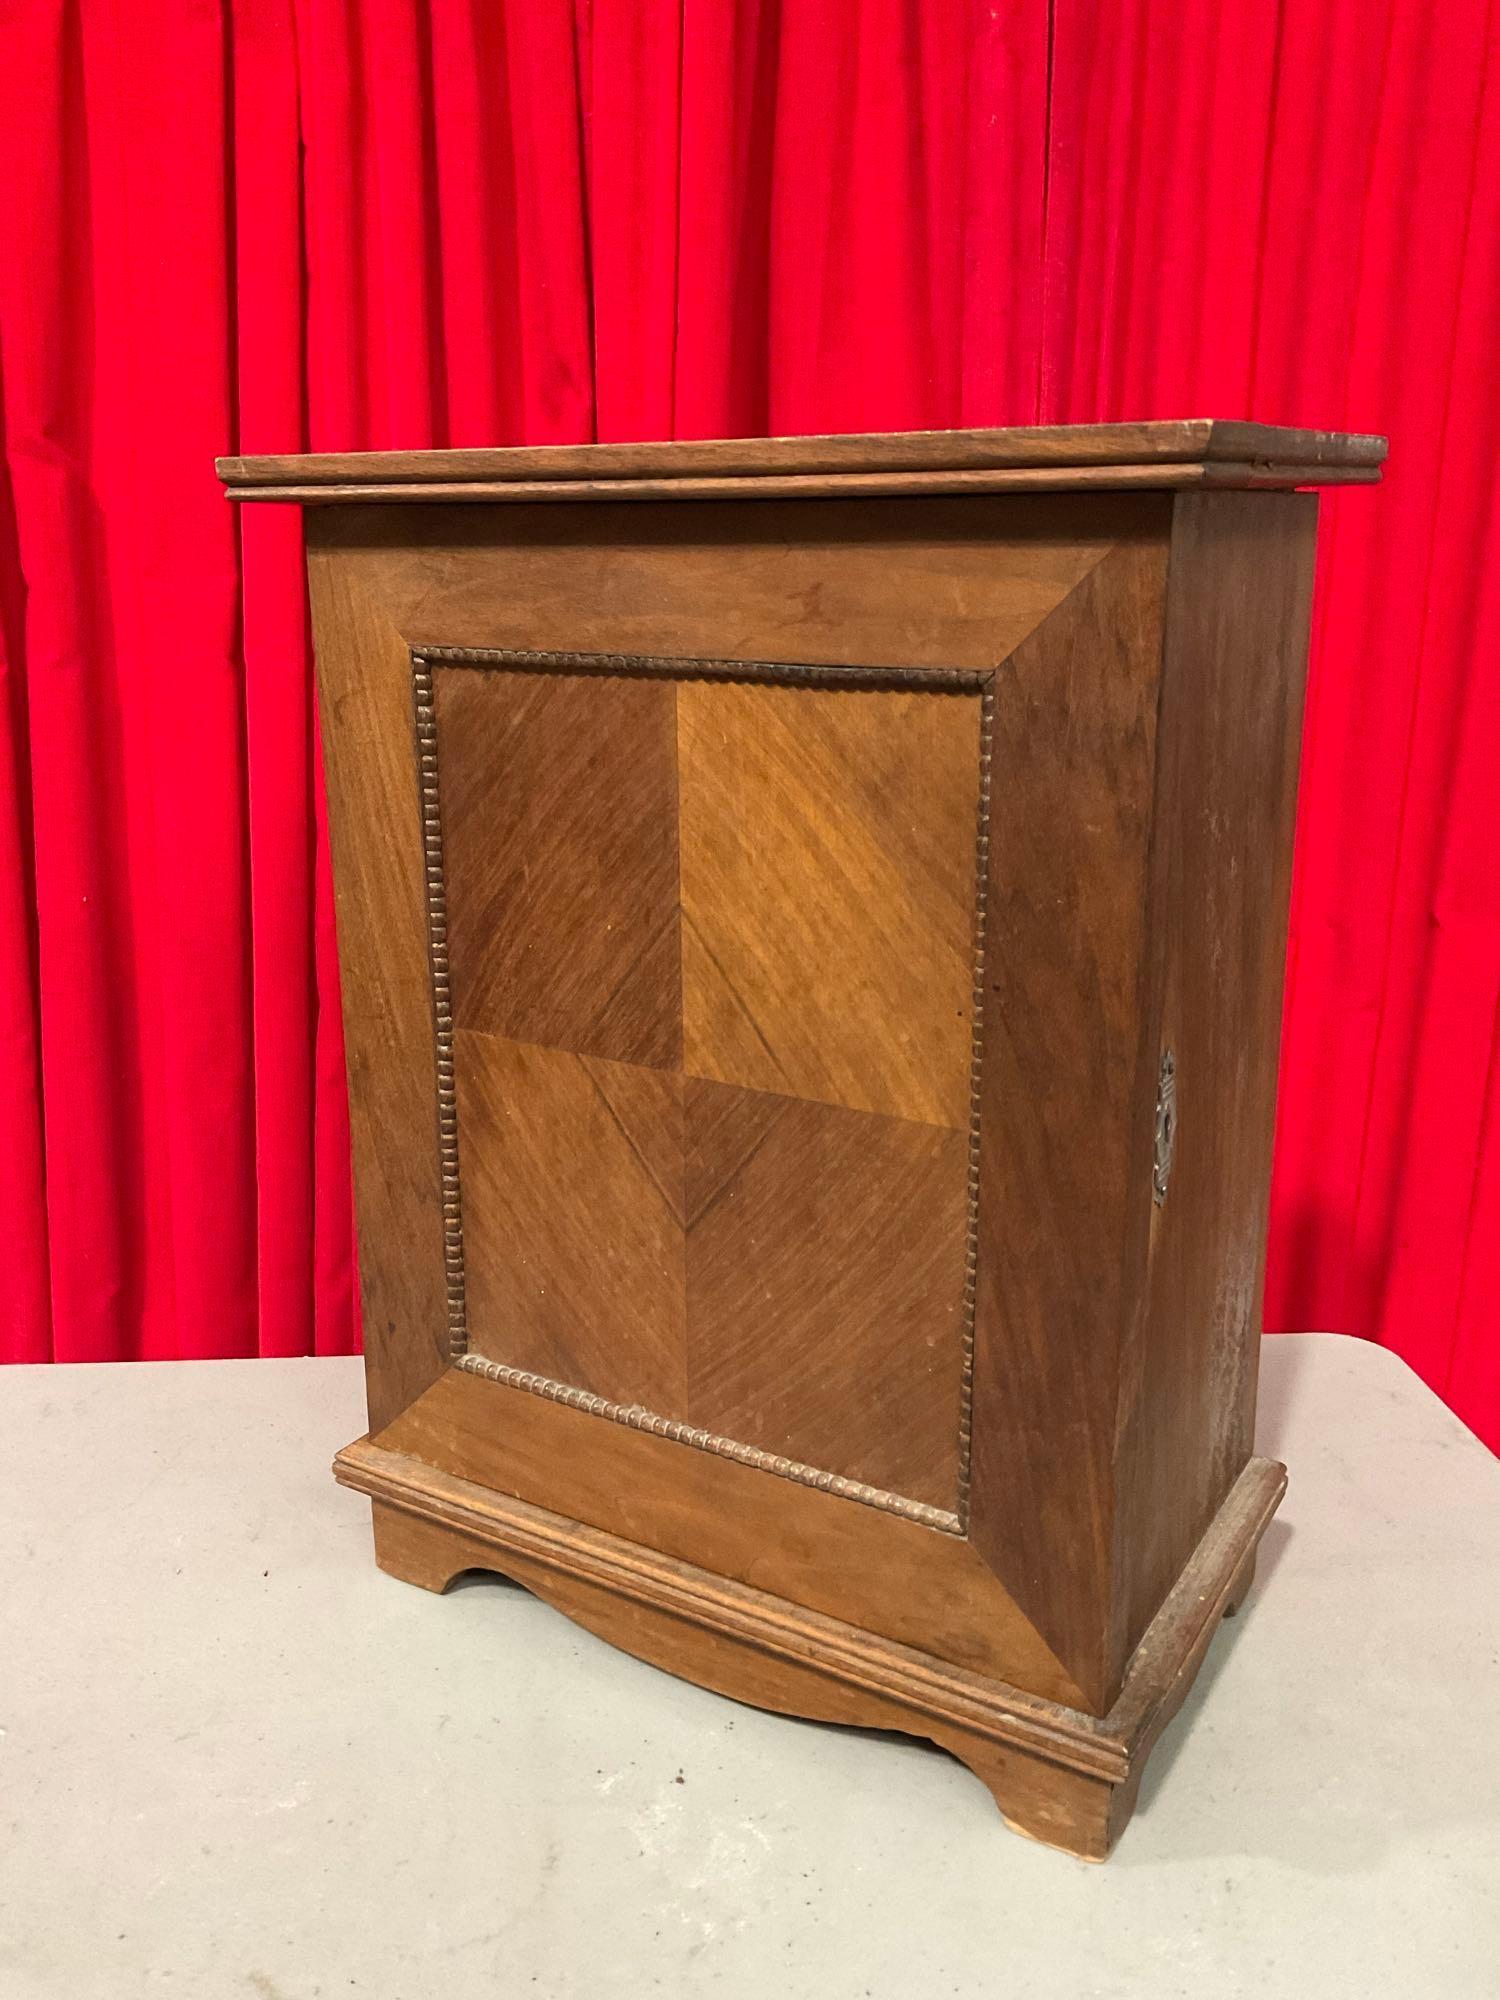 2 pcs Vintage Primitive Wooden Boxes. 1x Boys Union Tool Chest No. 600B. 1x Jewelry Box. See pics.